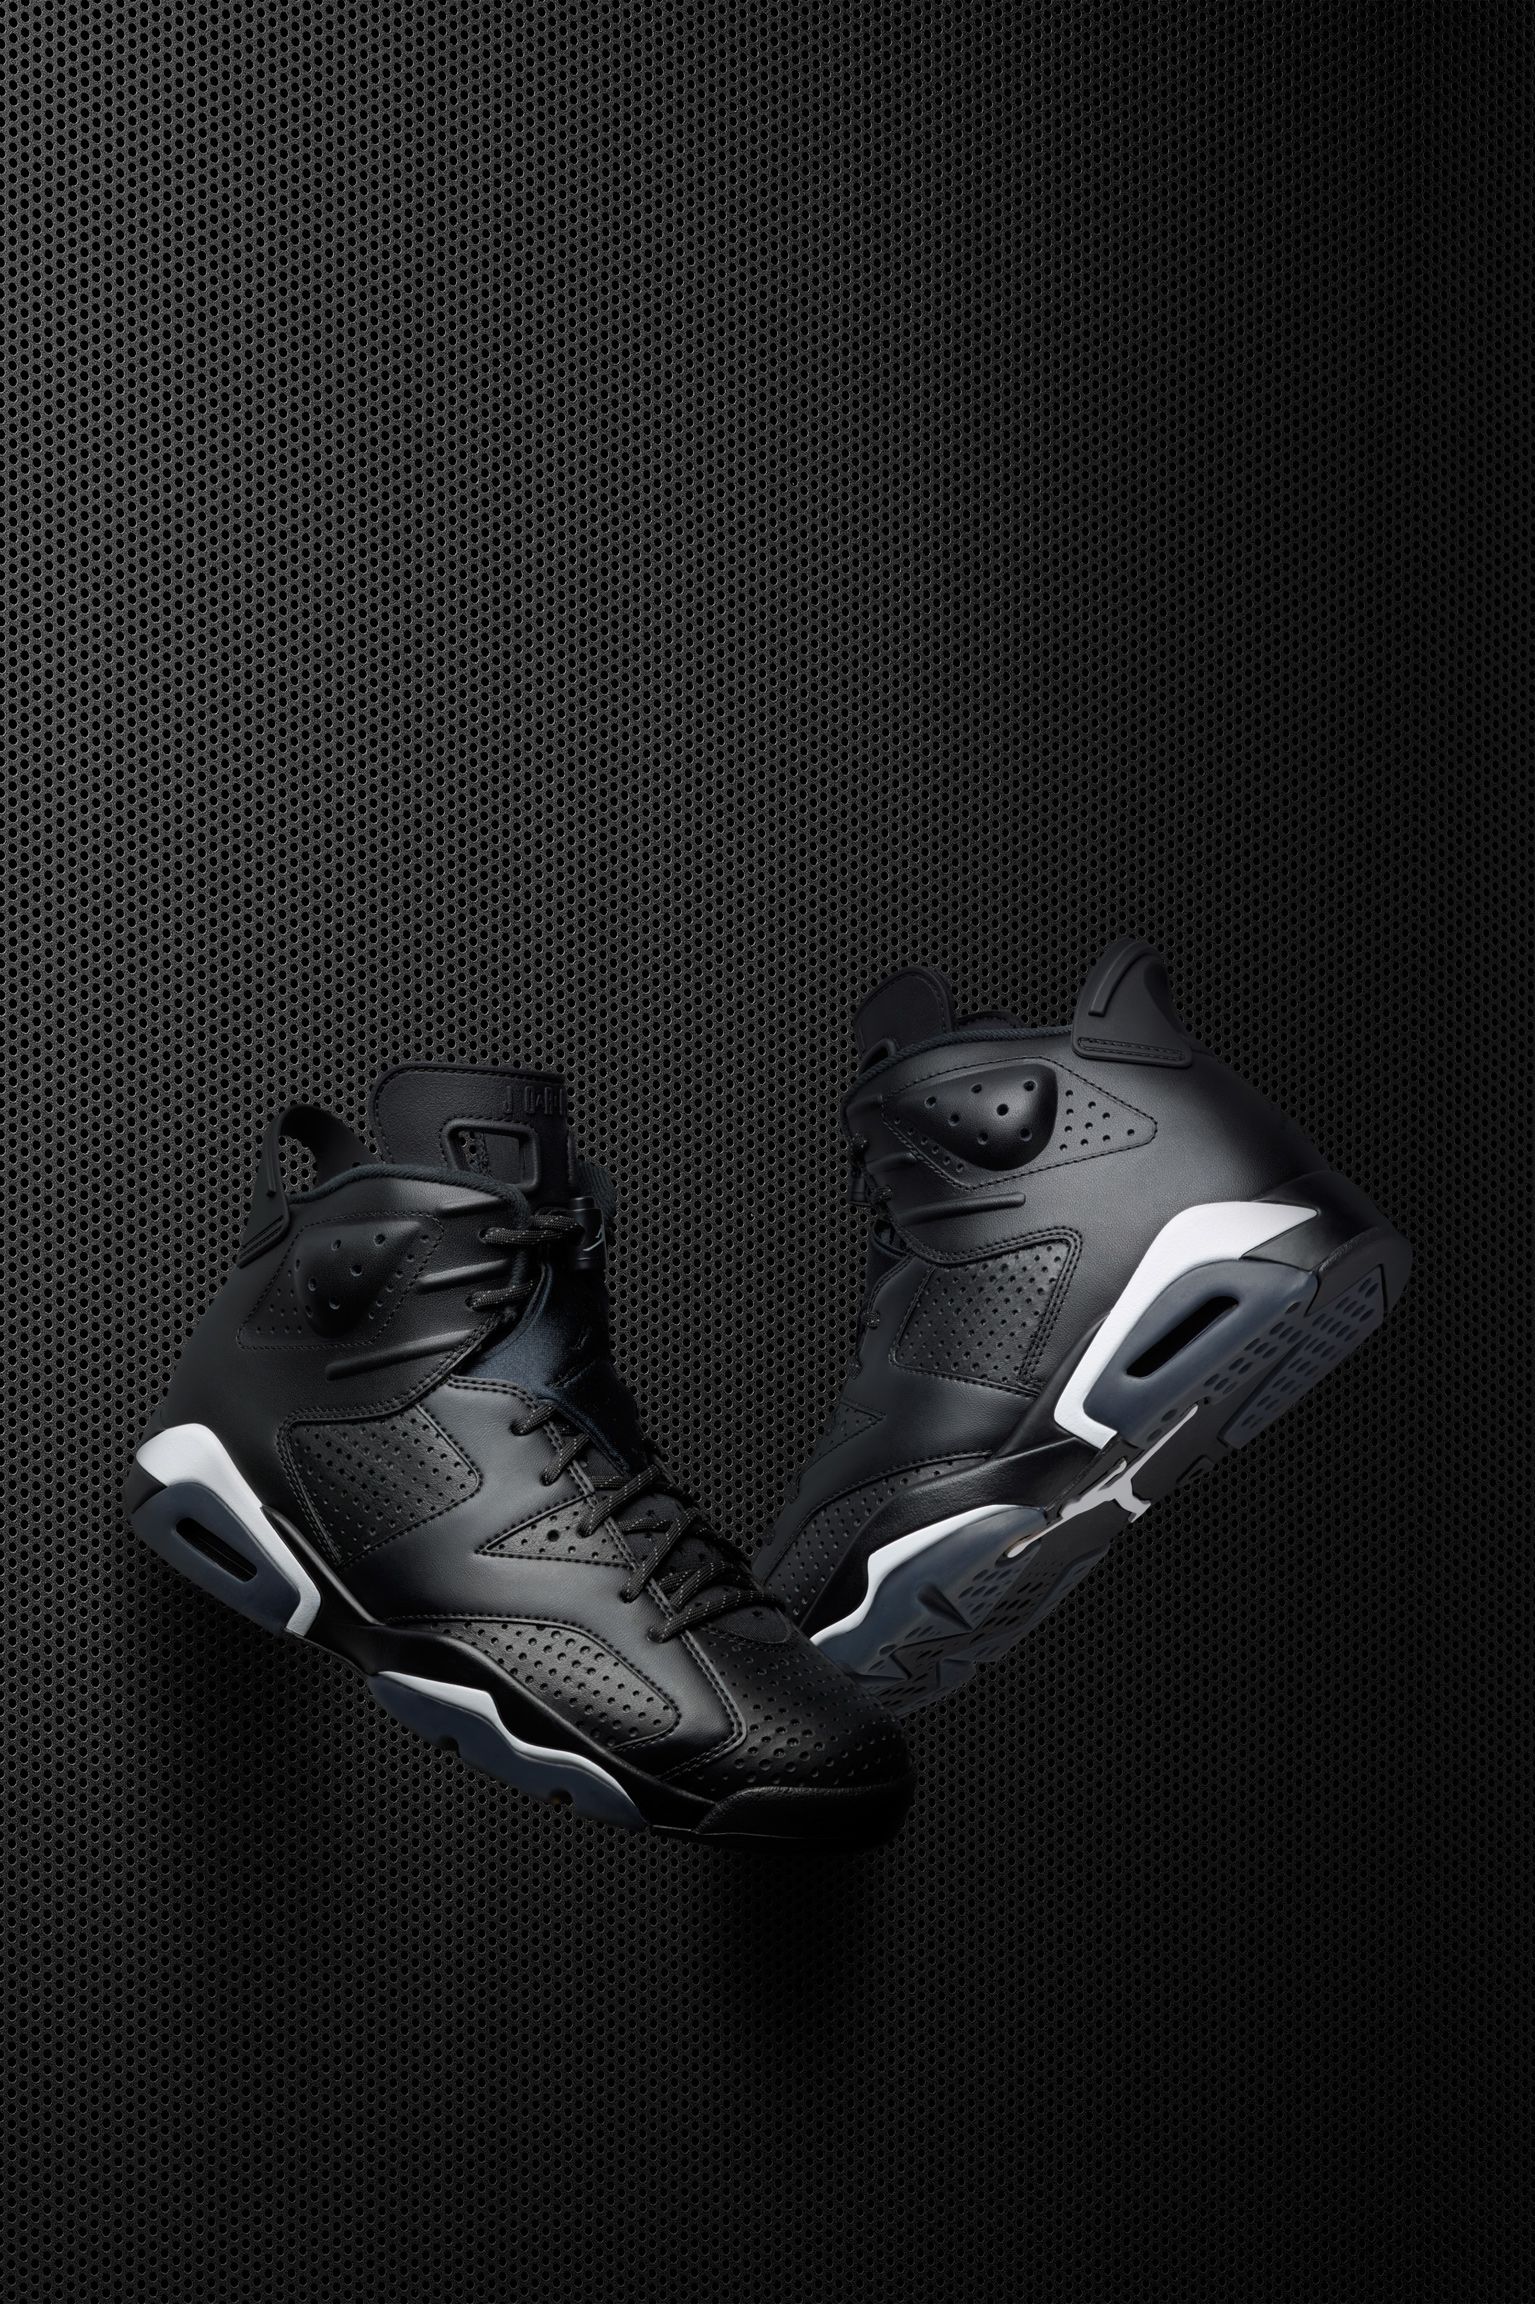 Sandalias Fundir constantemente Air Jordan 6 Retro "Black". Nike SNKRS ES